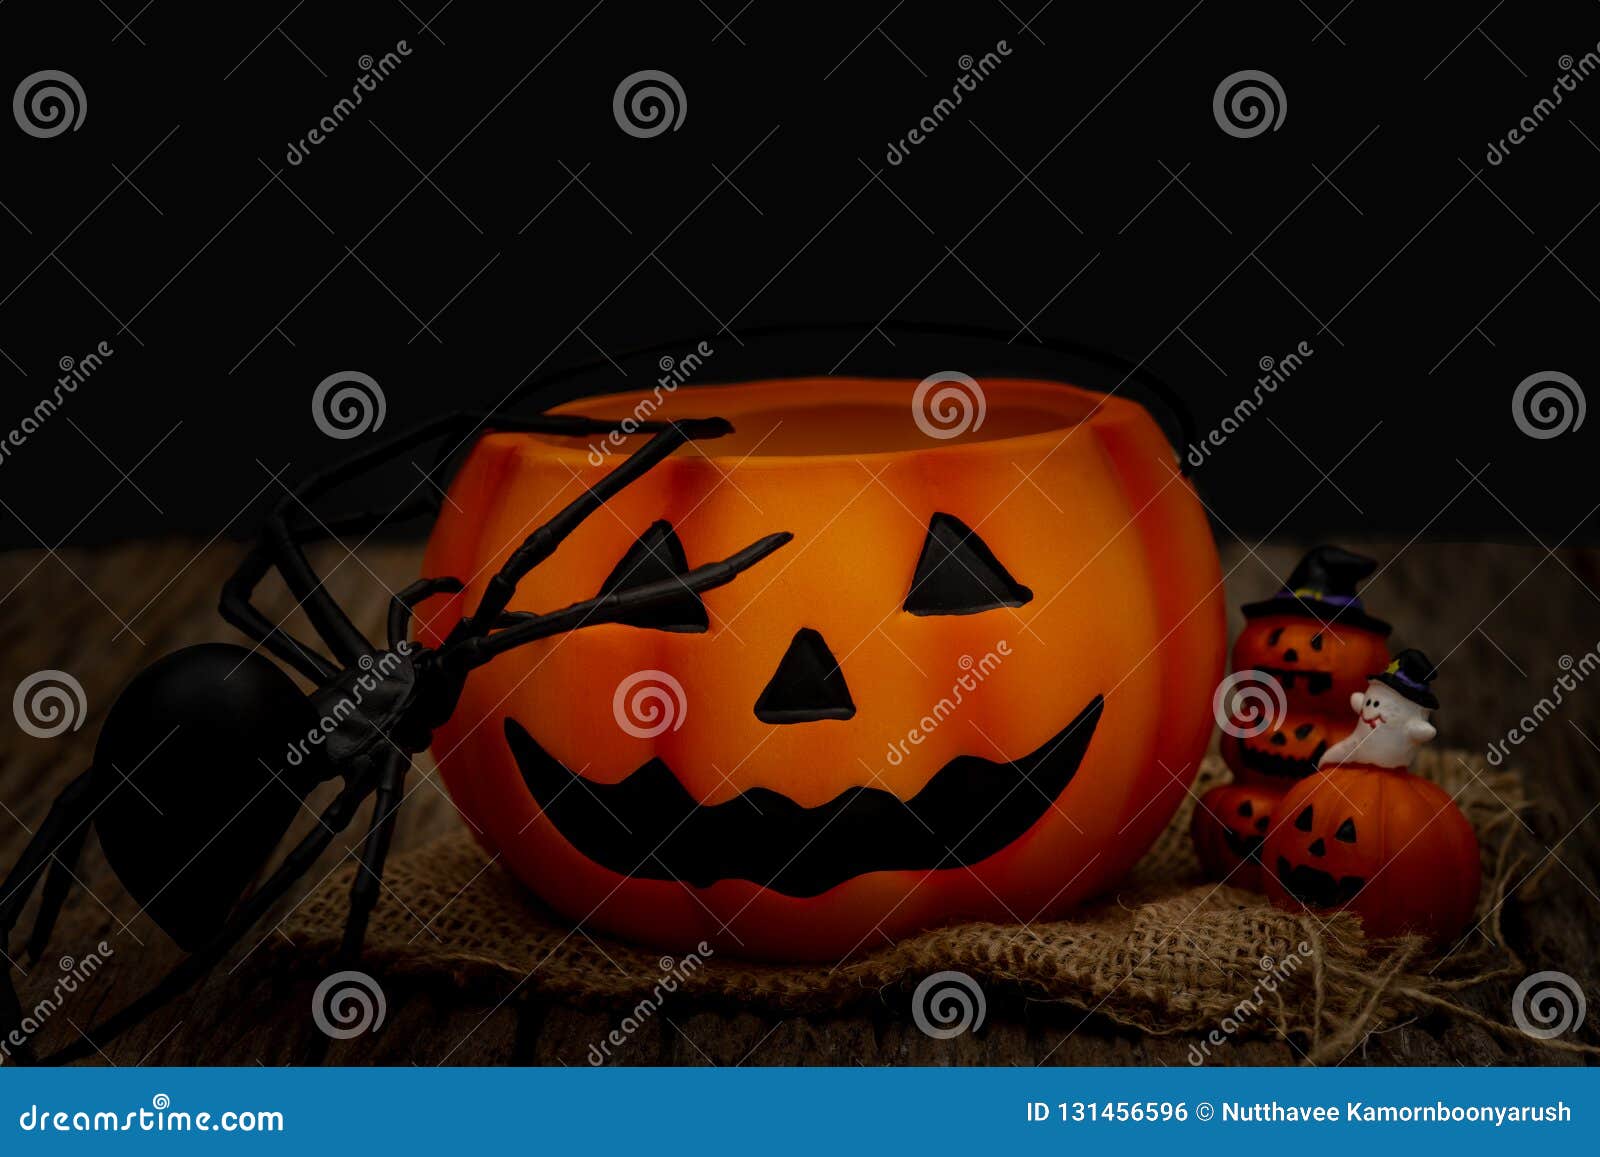 Still Life Halloween Pumpkin On Black Background. Dark Halloween ...